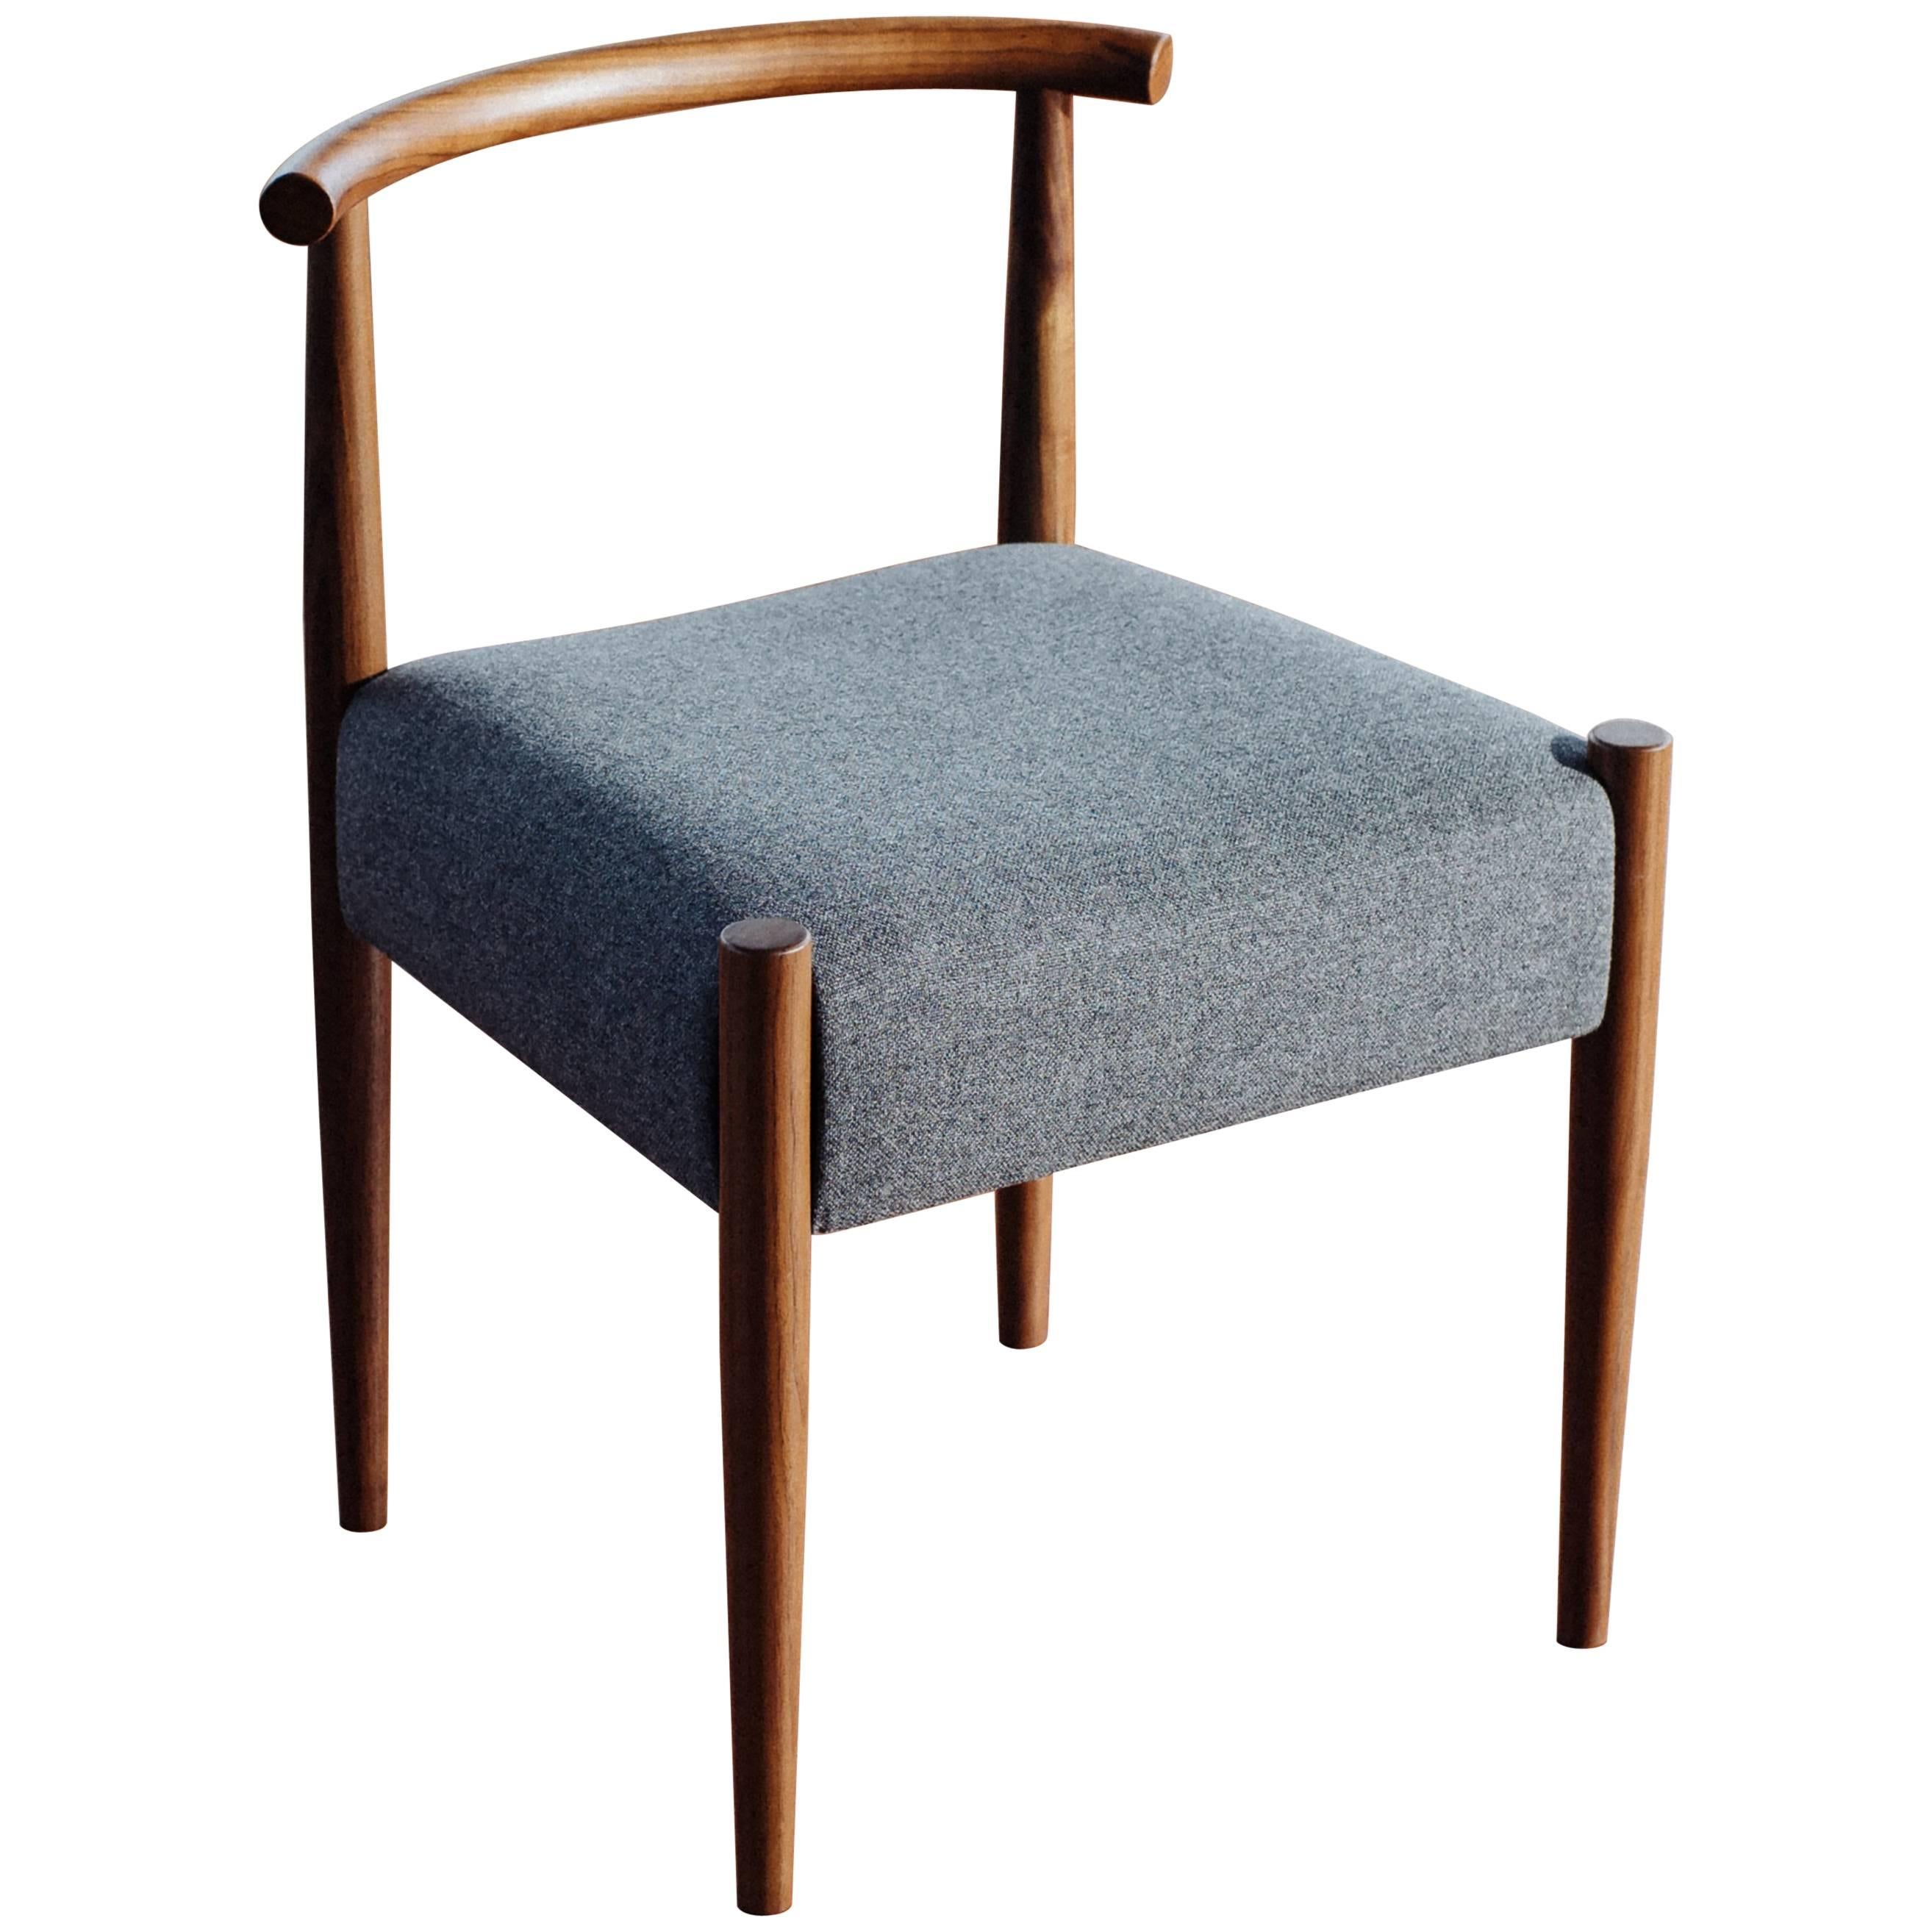 Phloem Studio Harbor Chair, Handmade Modern Chair with Wood and Upholstery